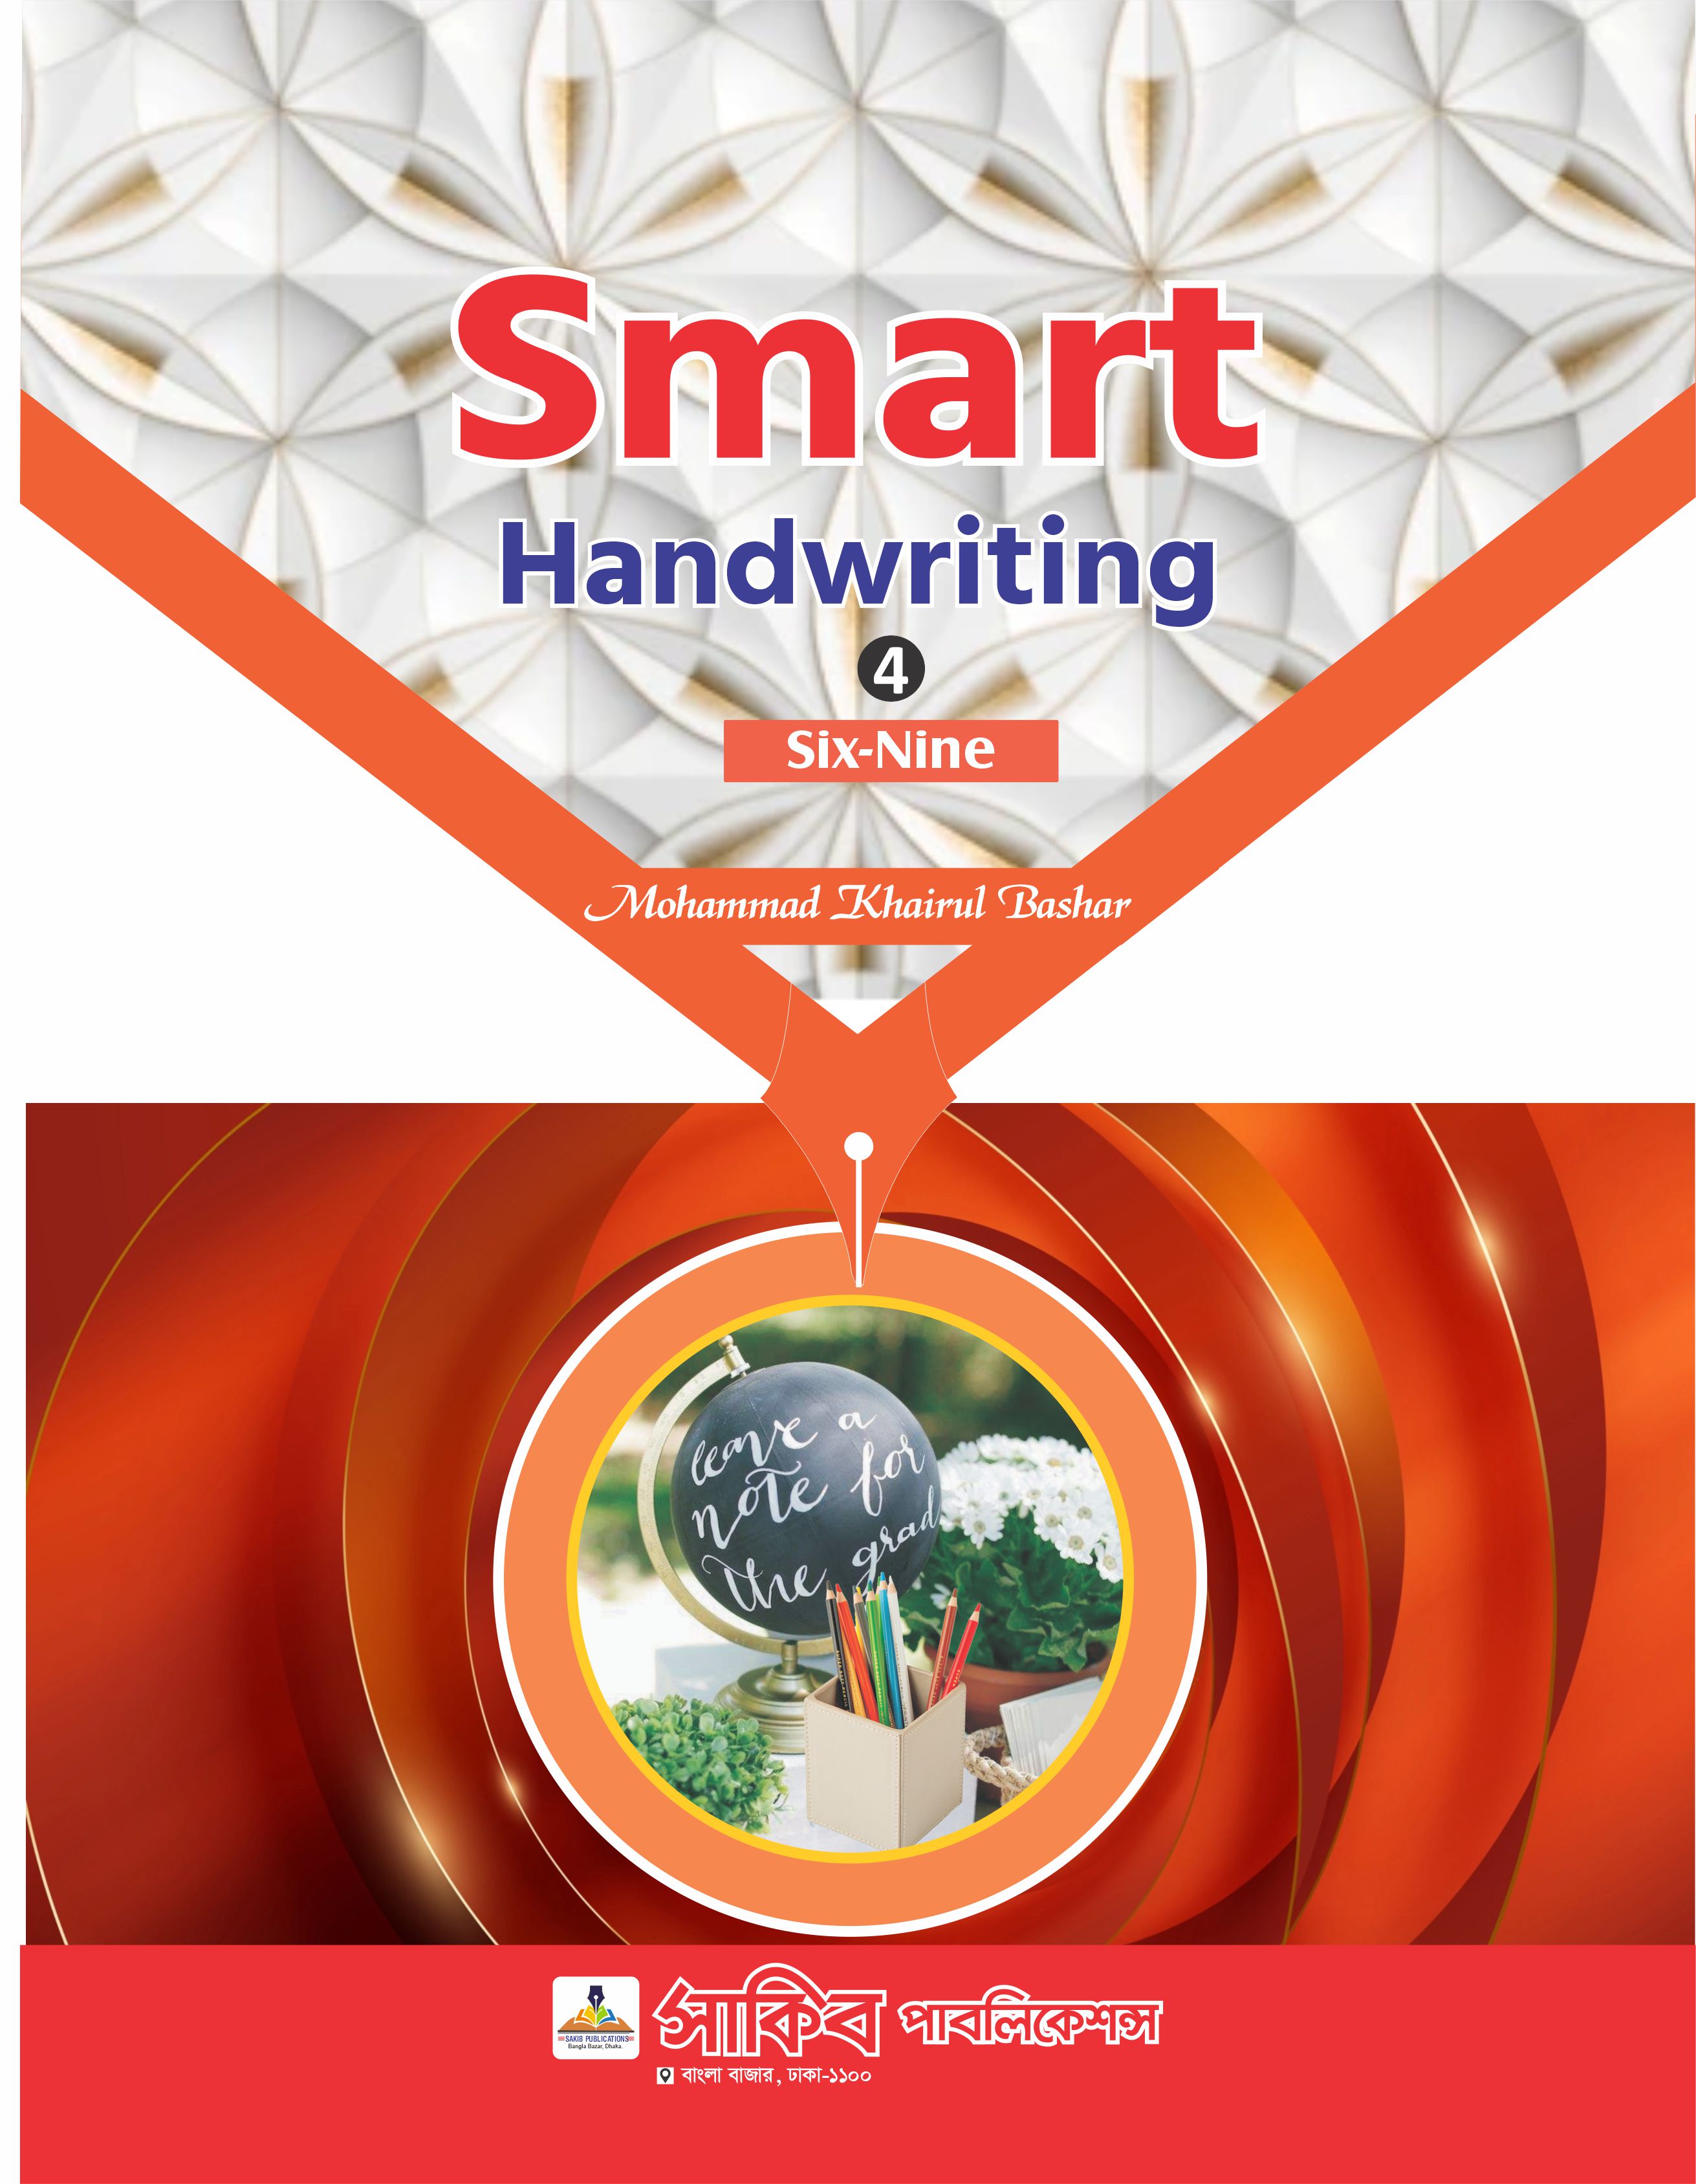 Smart Handwriting 4 (Paperback) Six-Nine - 4